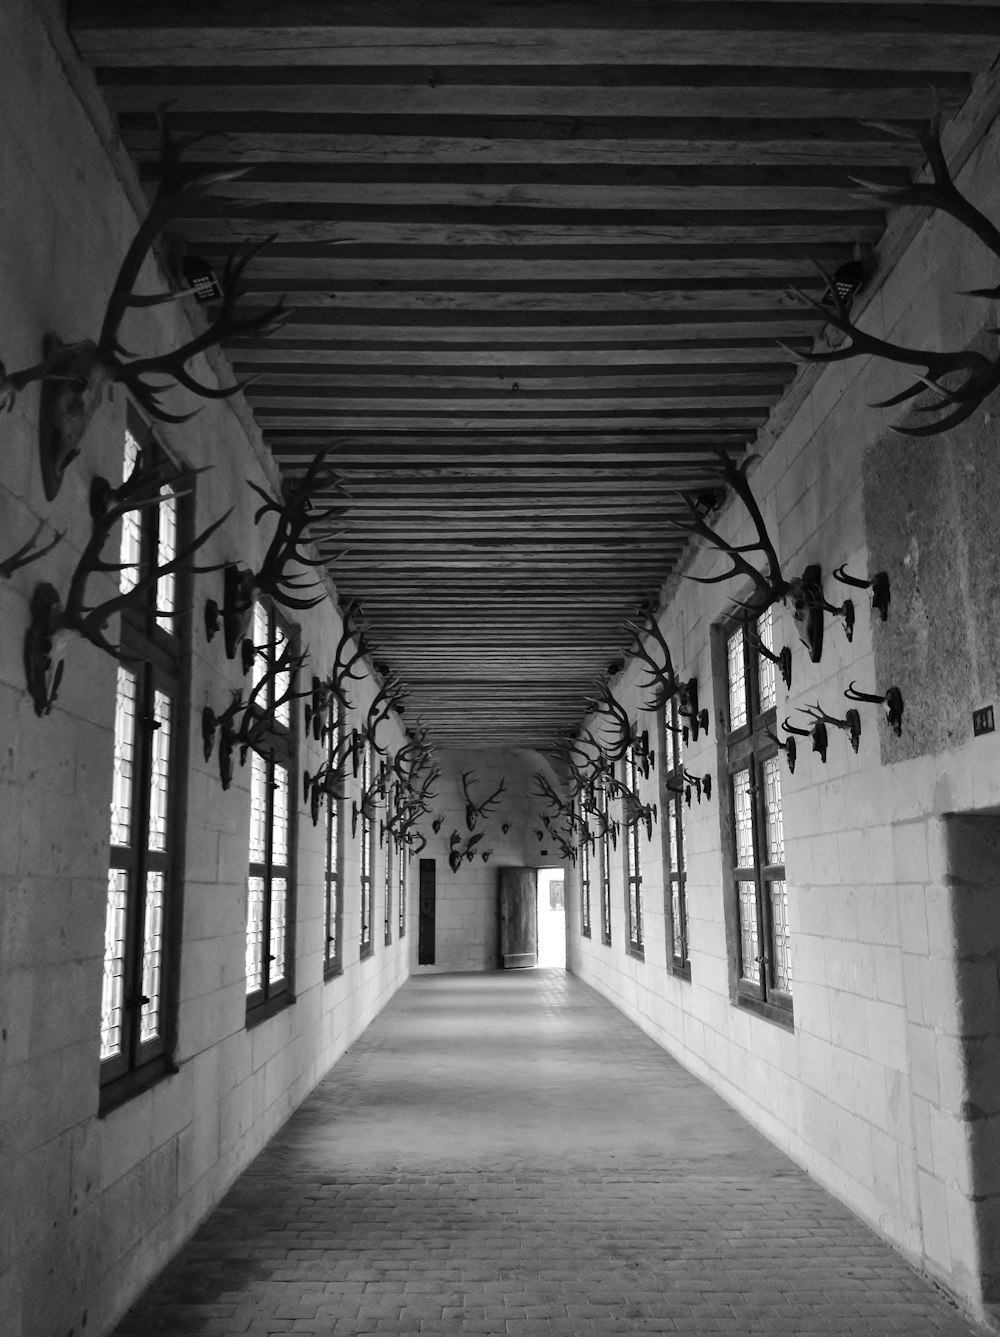 empty hallway with antlers